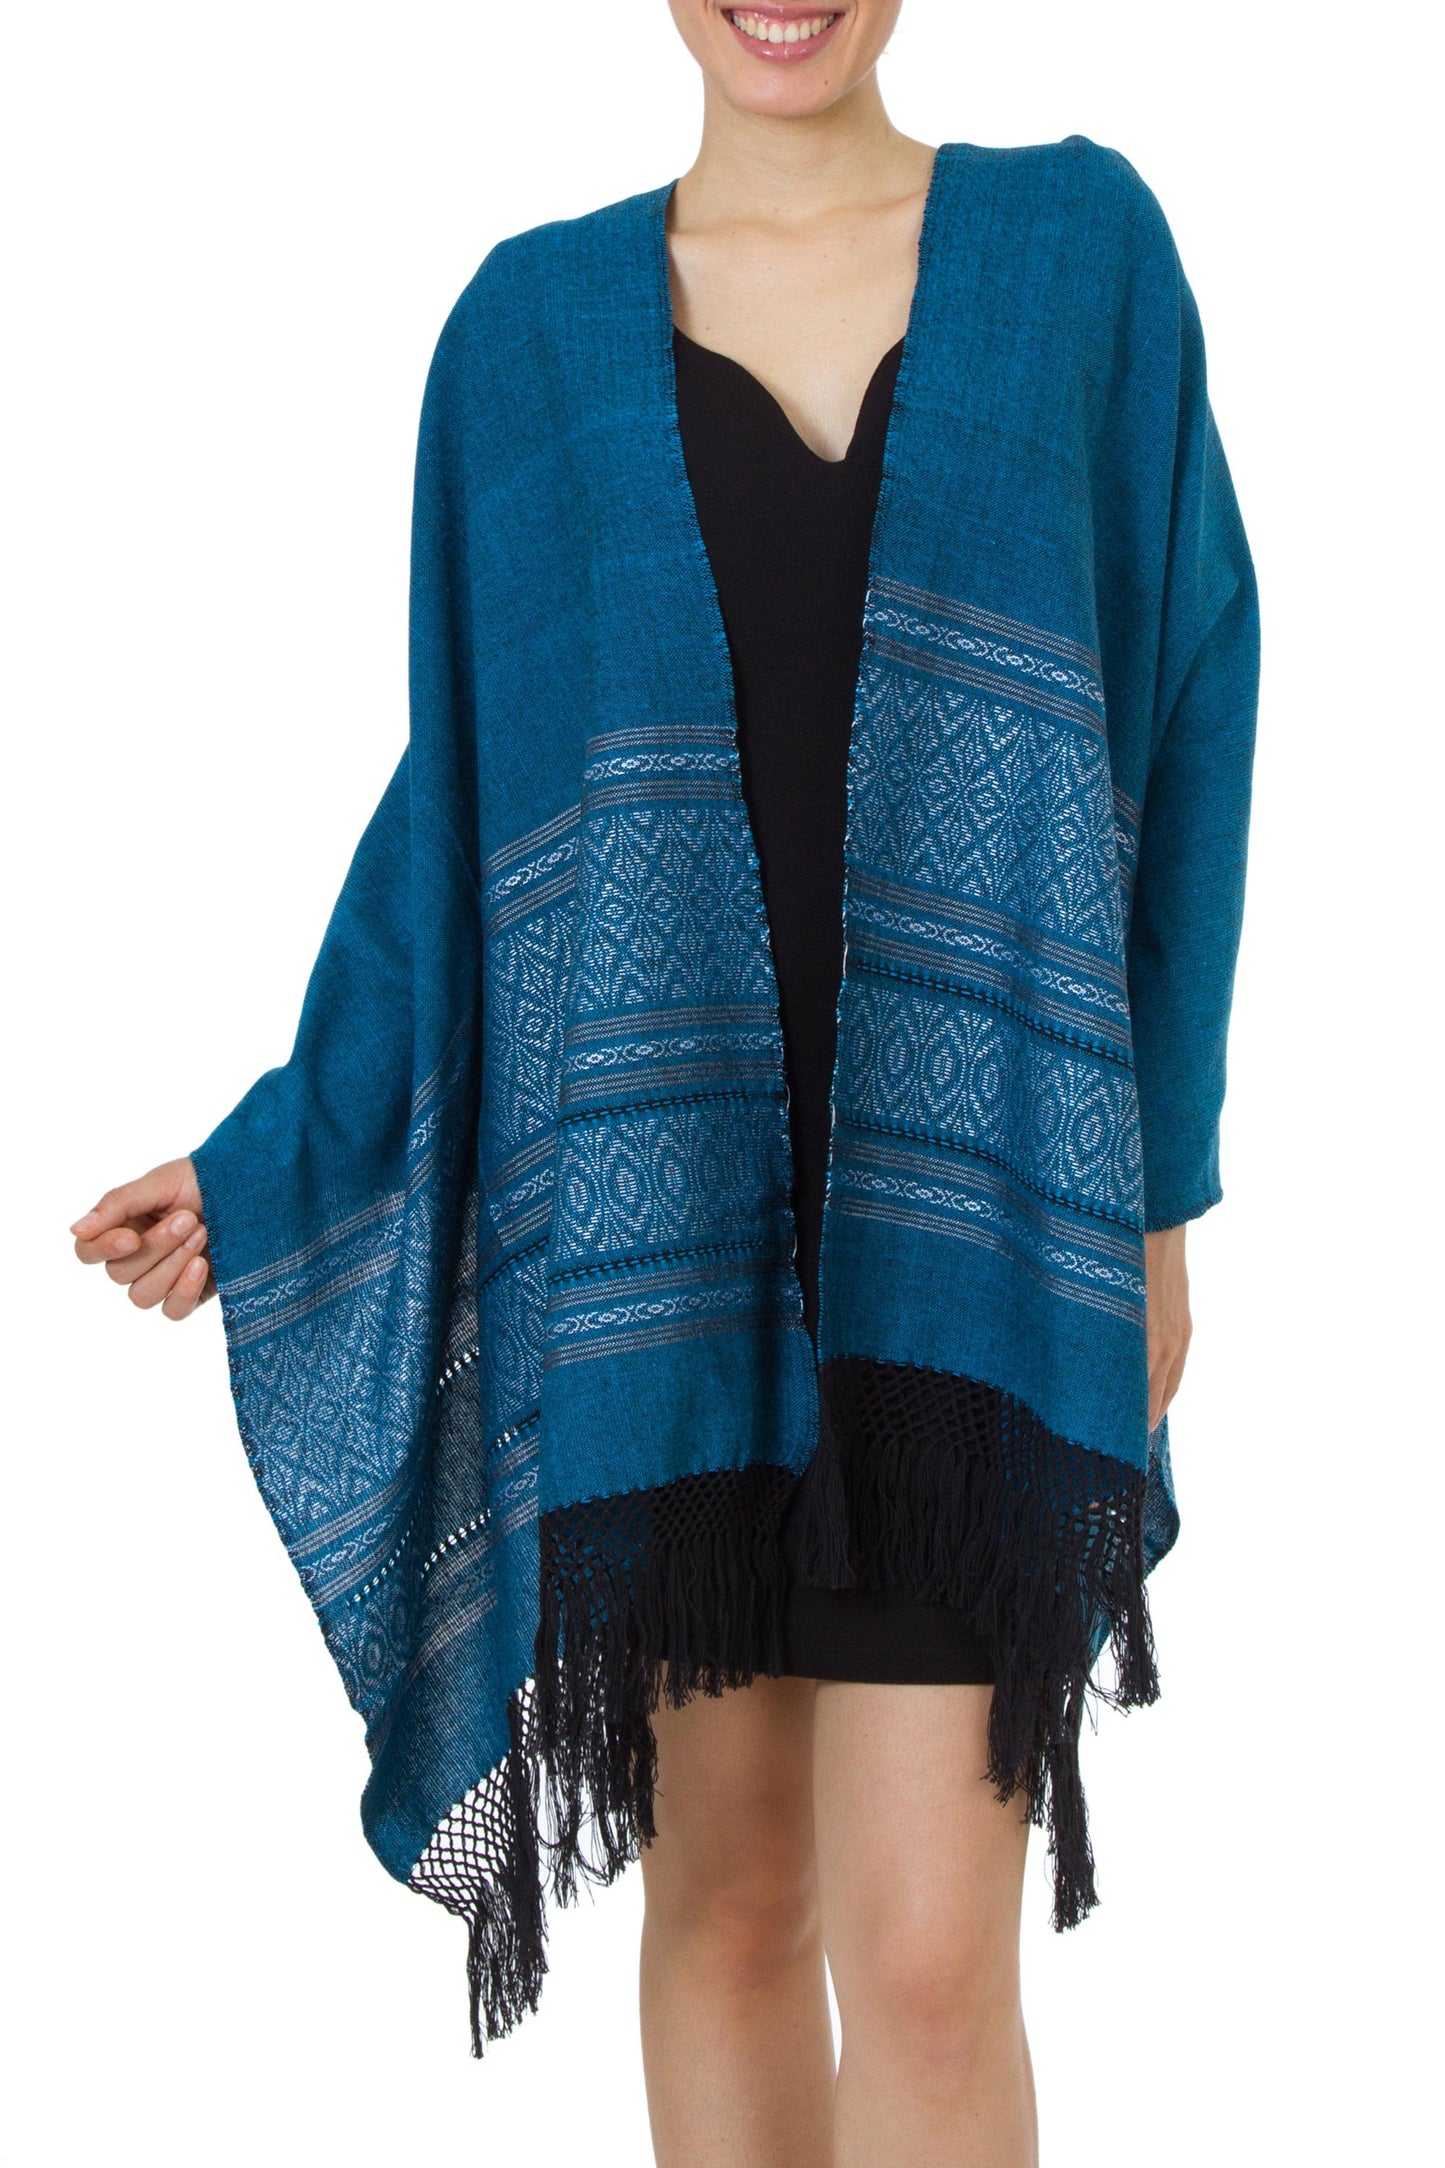 Zapotec cotton rebozo shawl, 'Blue Zapotec Treasures'